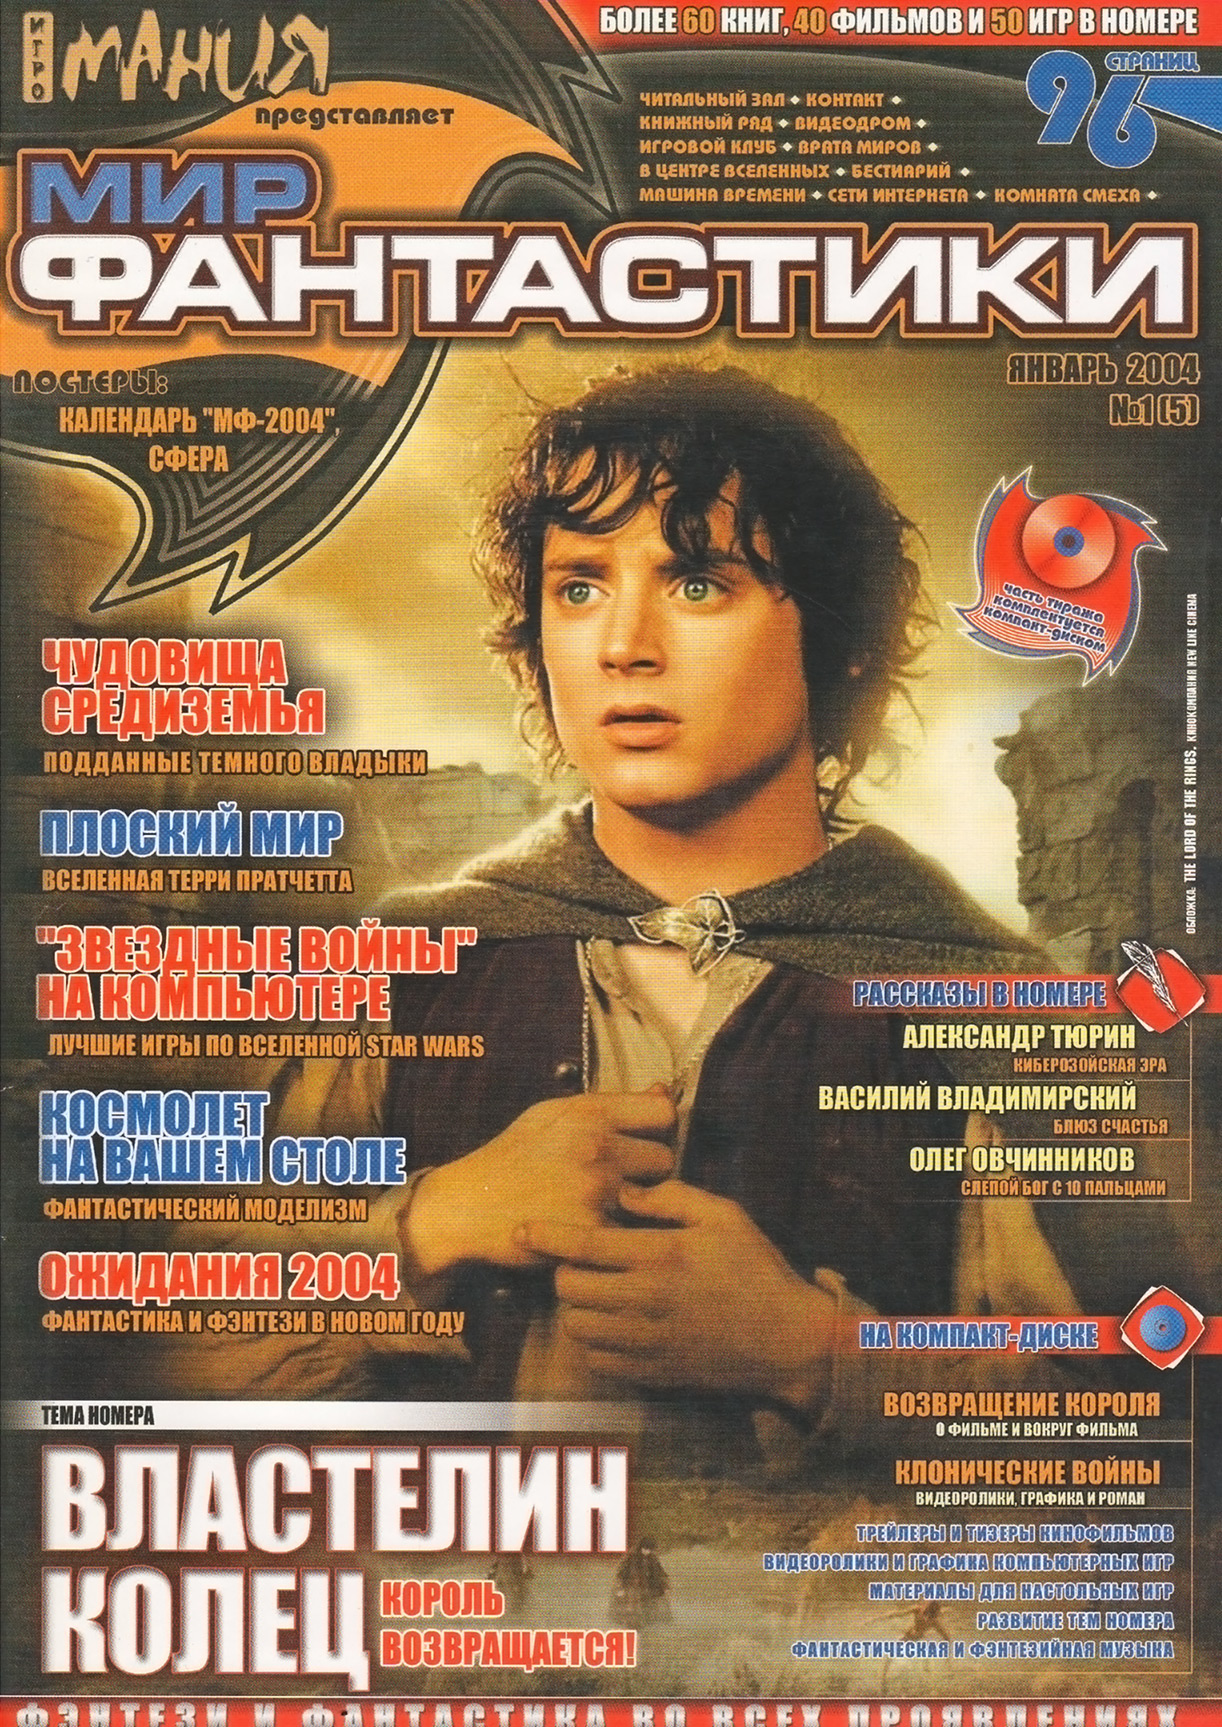 5 января 2004 г. Мир фантастики №6 (февраль 2004). Мир фантастики журнал. Журнал фантастики. Мир фантастики 2005.